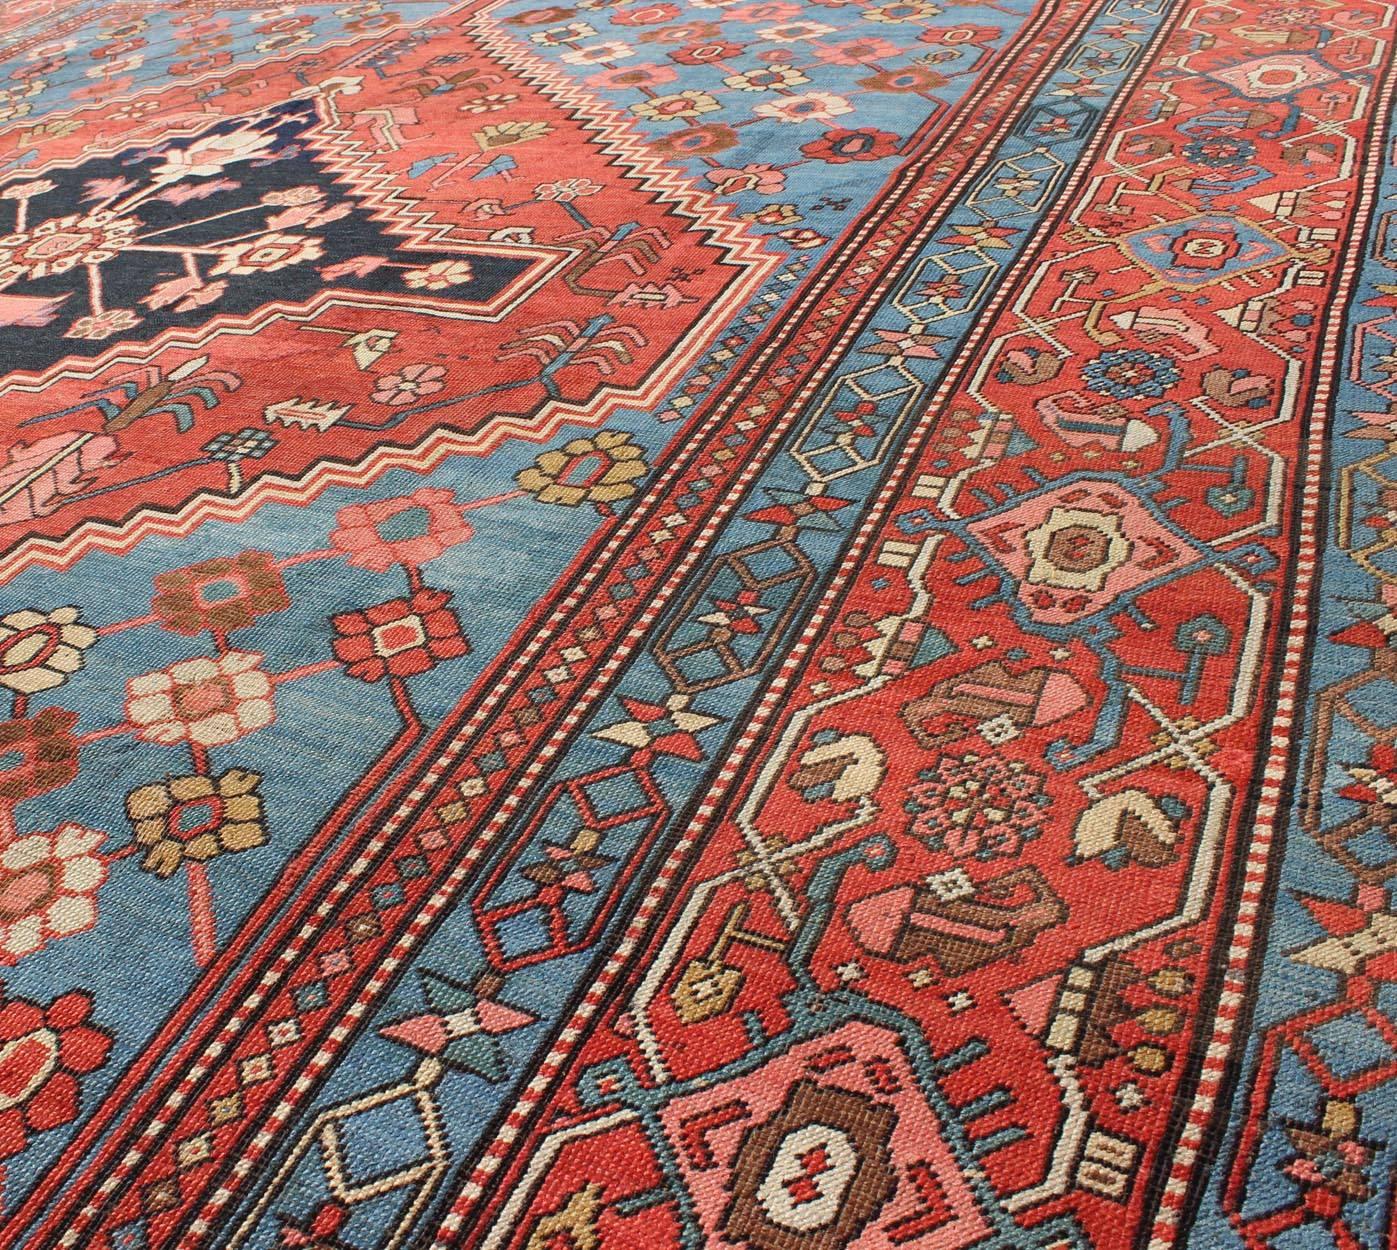 19th Century Antique Persian Bakhshaish Carpet with a Unique Geometric Medallion and Design For Sale